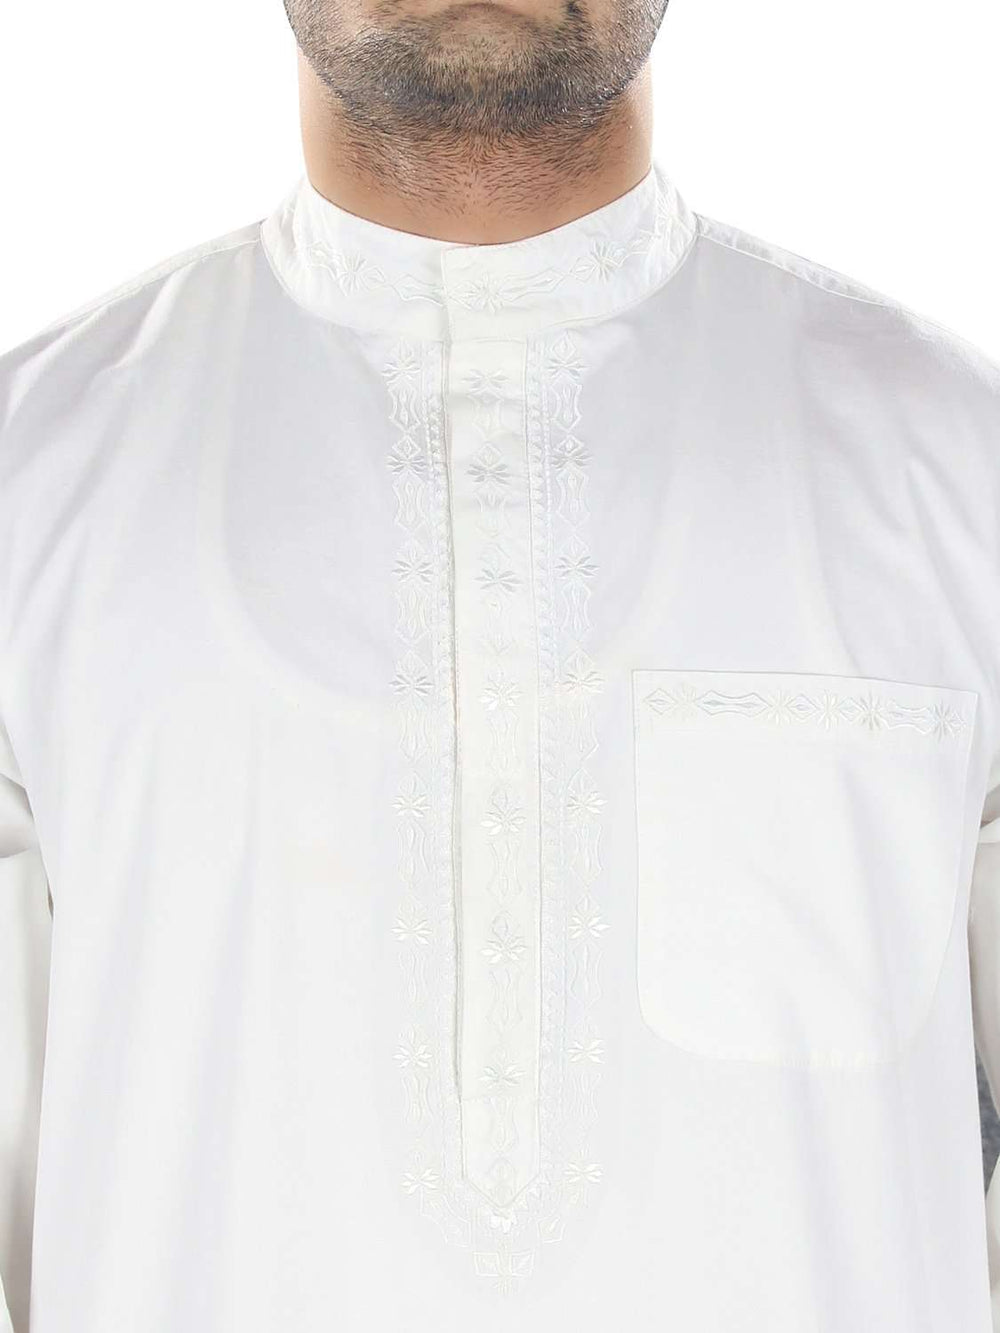 Arif Embroidered Kurta Pajama